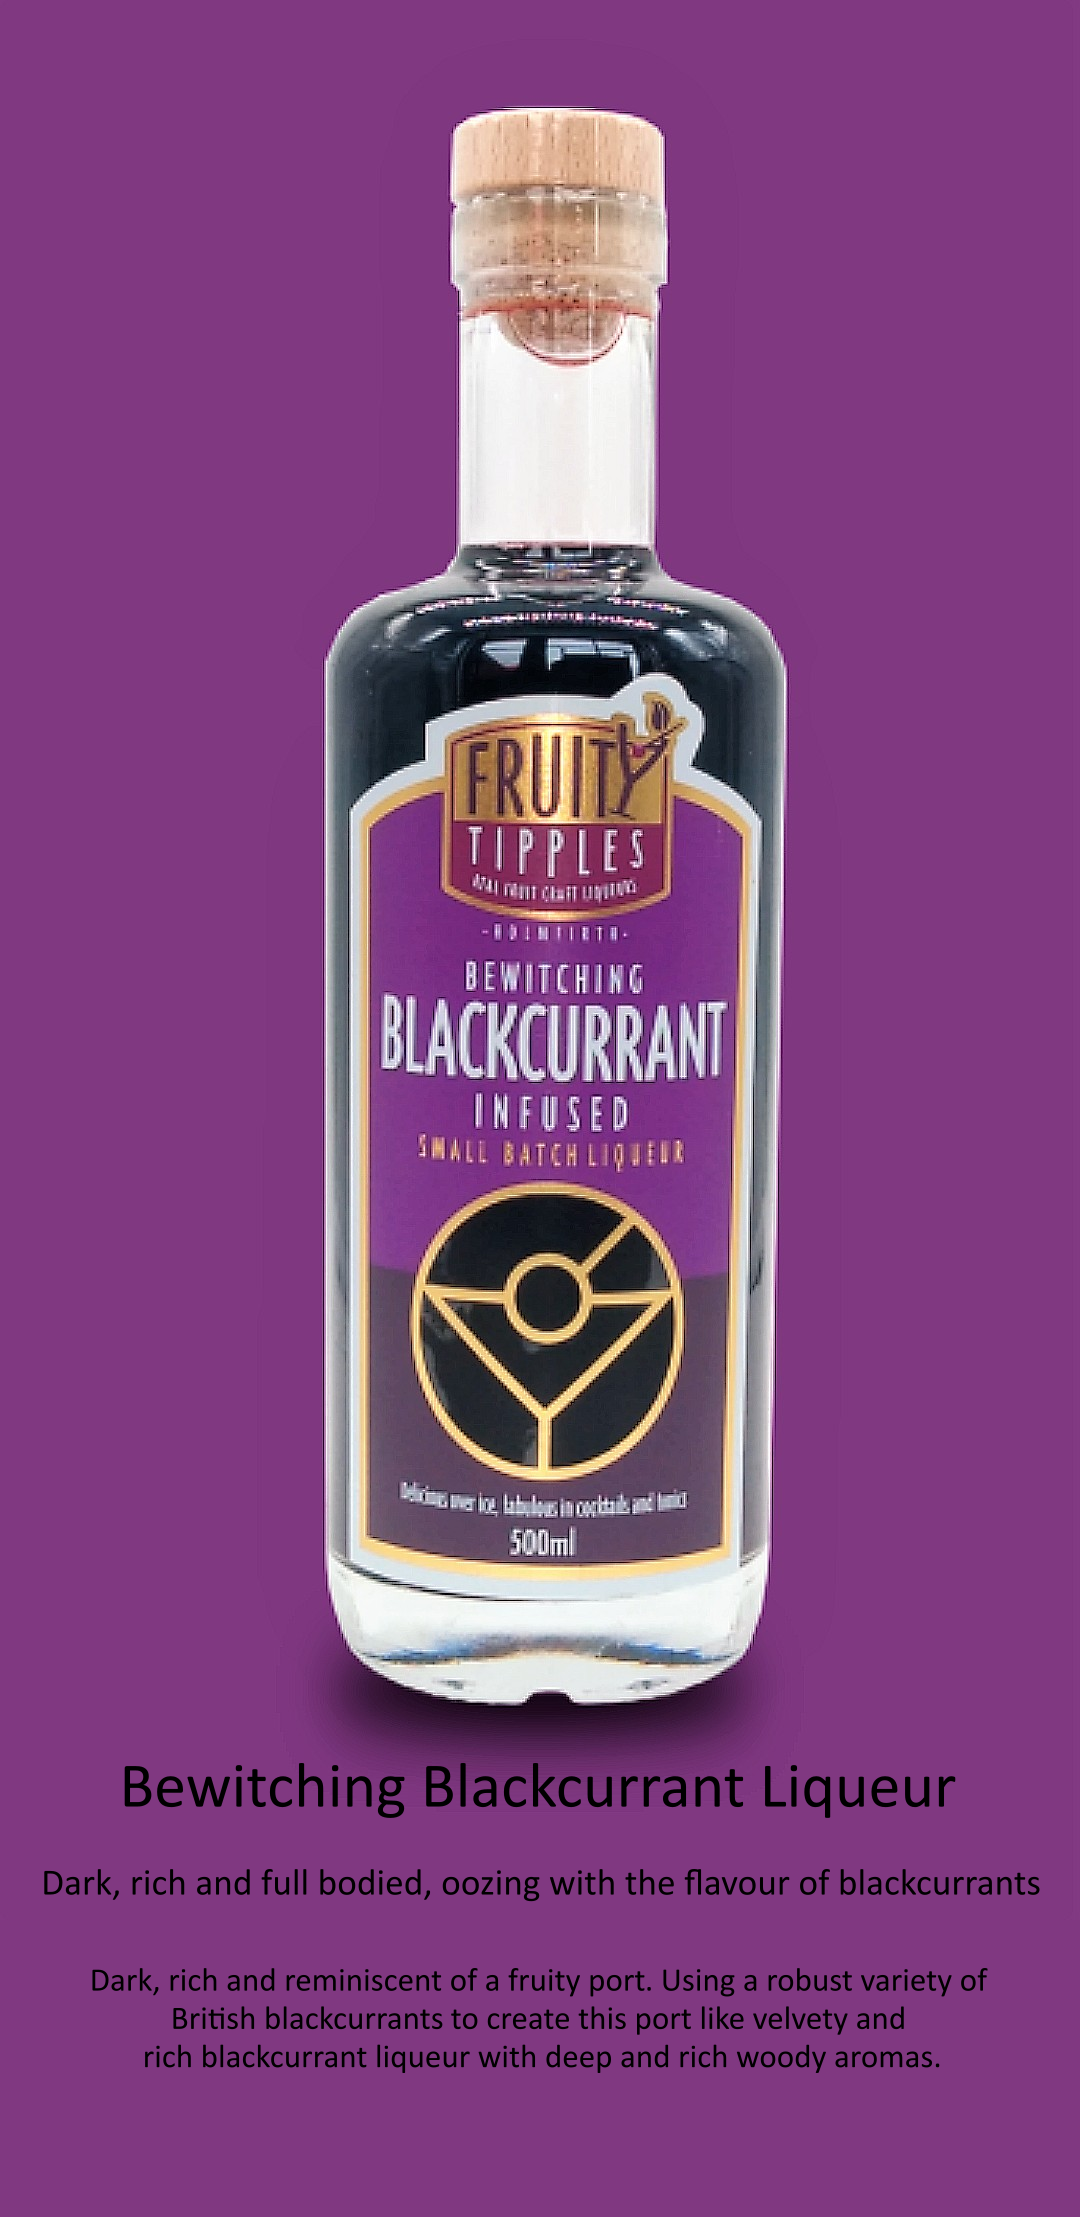 Blackcurrant Liqueur by Fruity Tipples